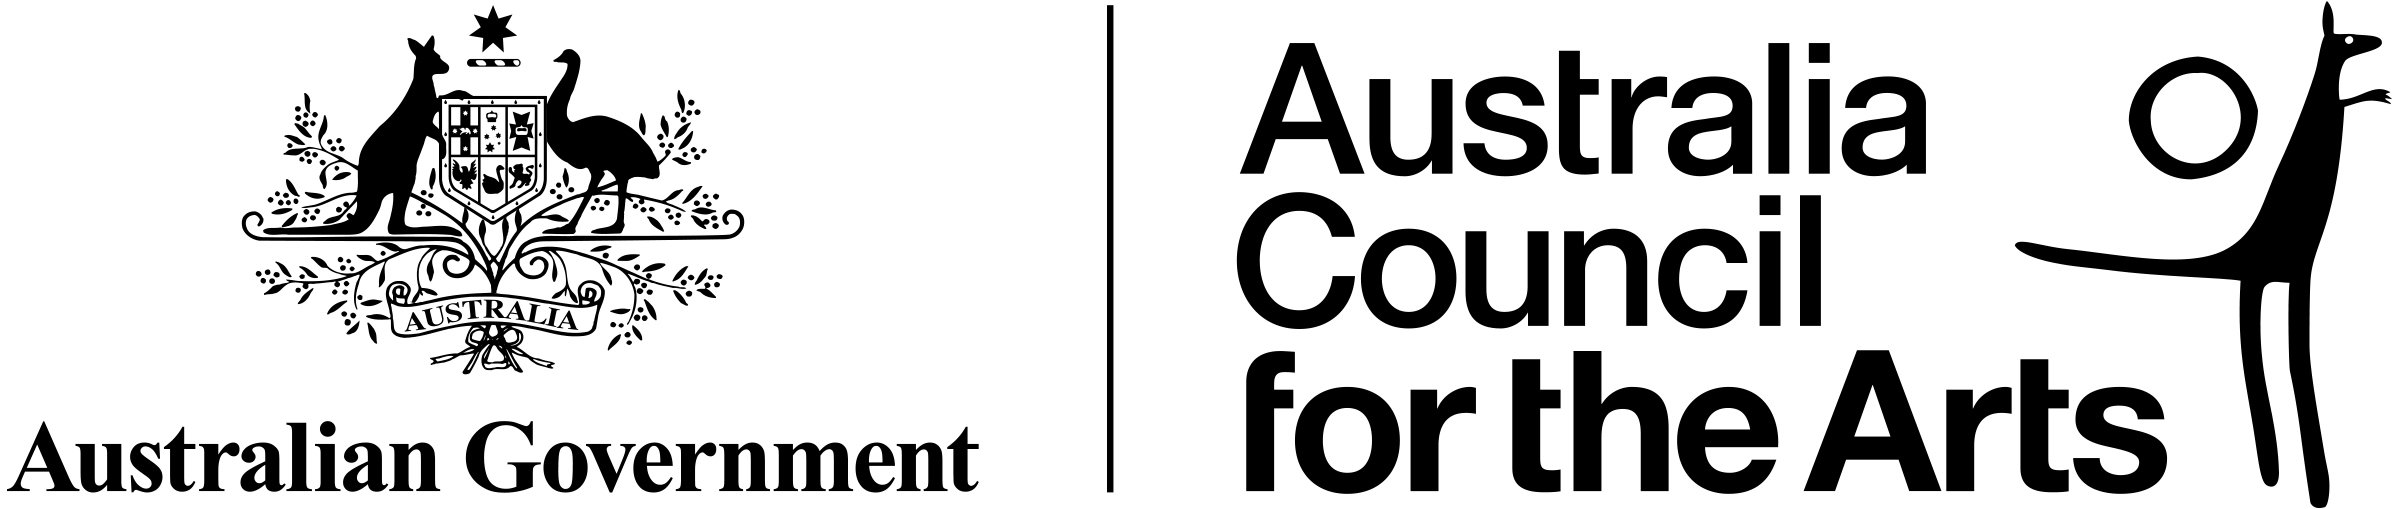 Australia Council logo_Black on white (2).jpg